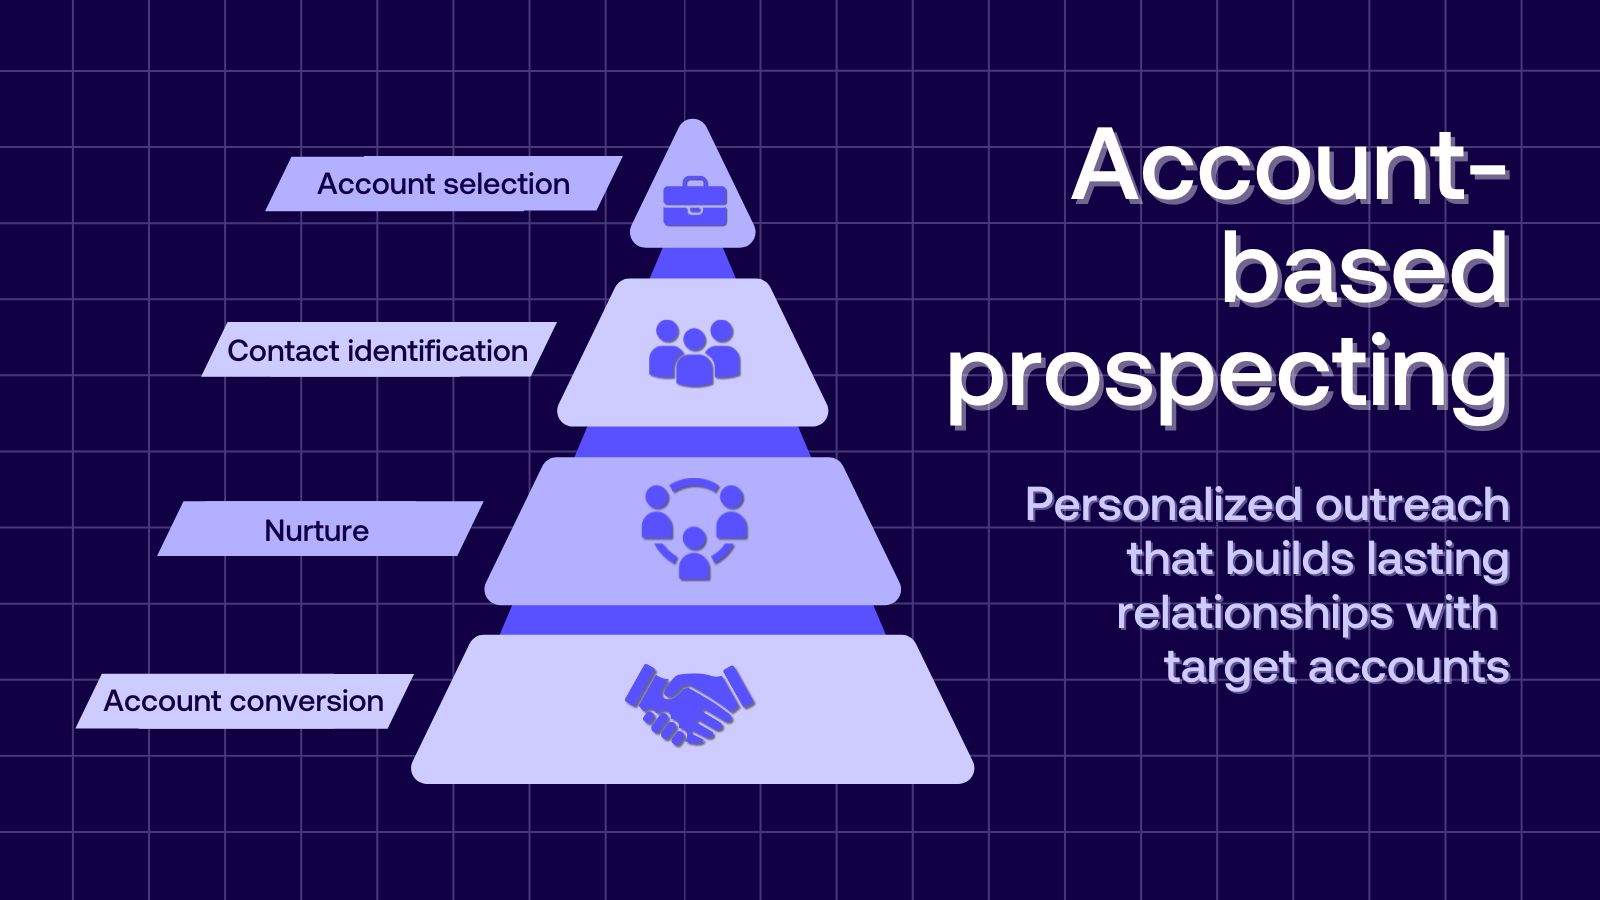 Account based prospecting